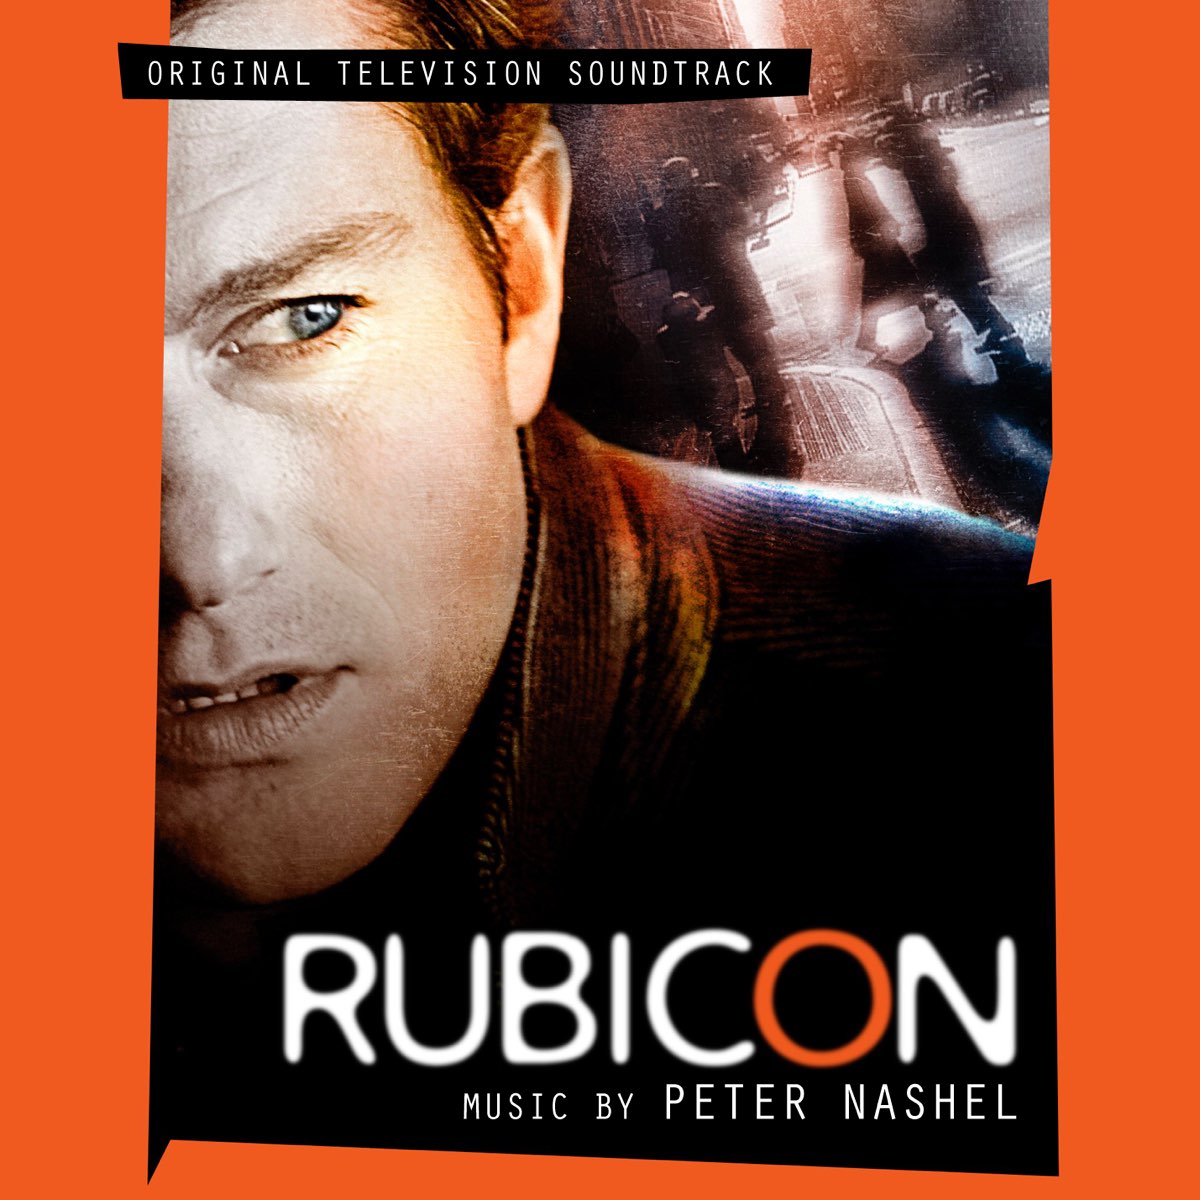 Саша и питер саундтрек. Rubicon 2010 Series poster. Обложка диска House of thumbs - Crossing the Rubicon (2010). OST Rubicon.